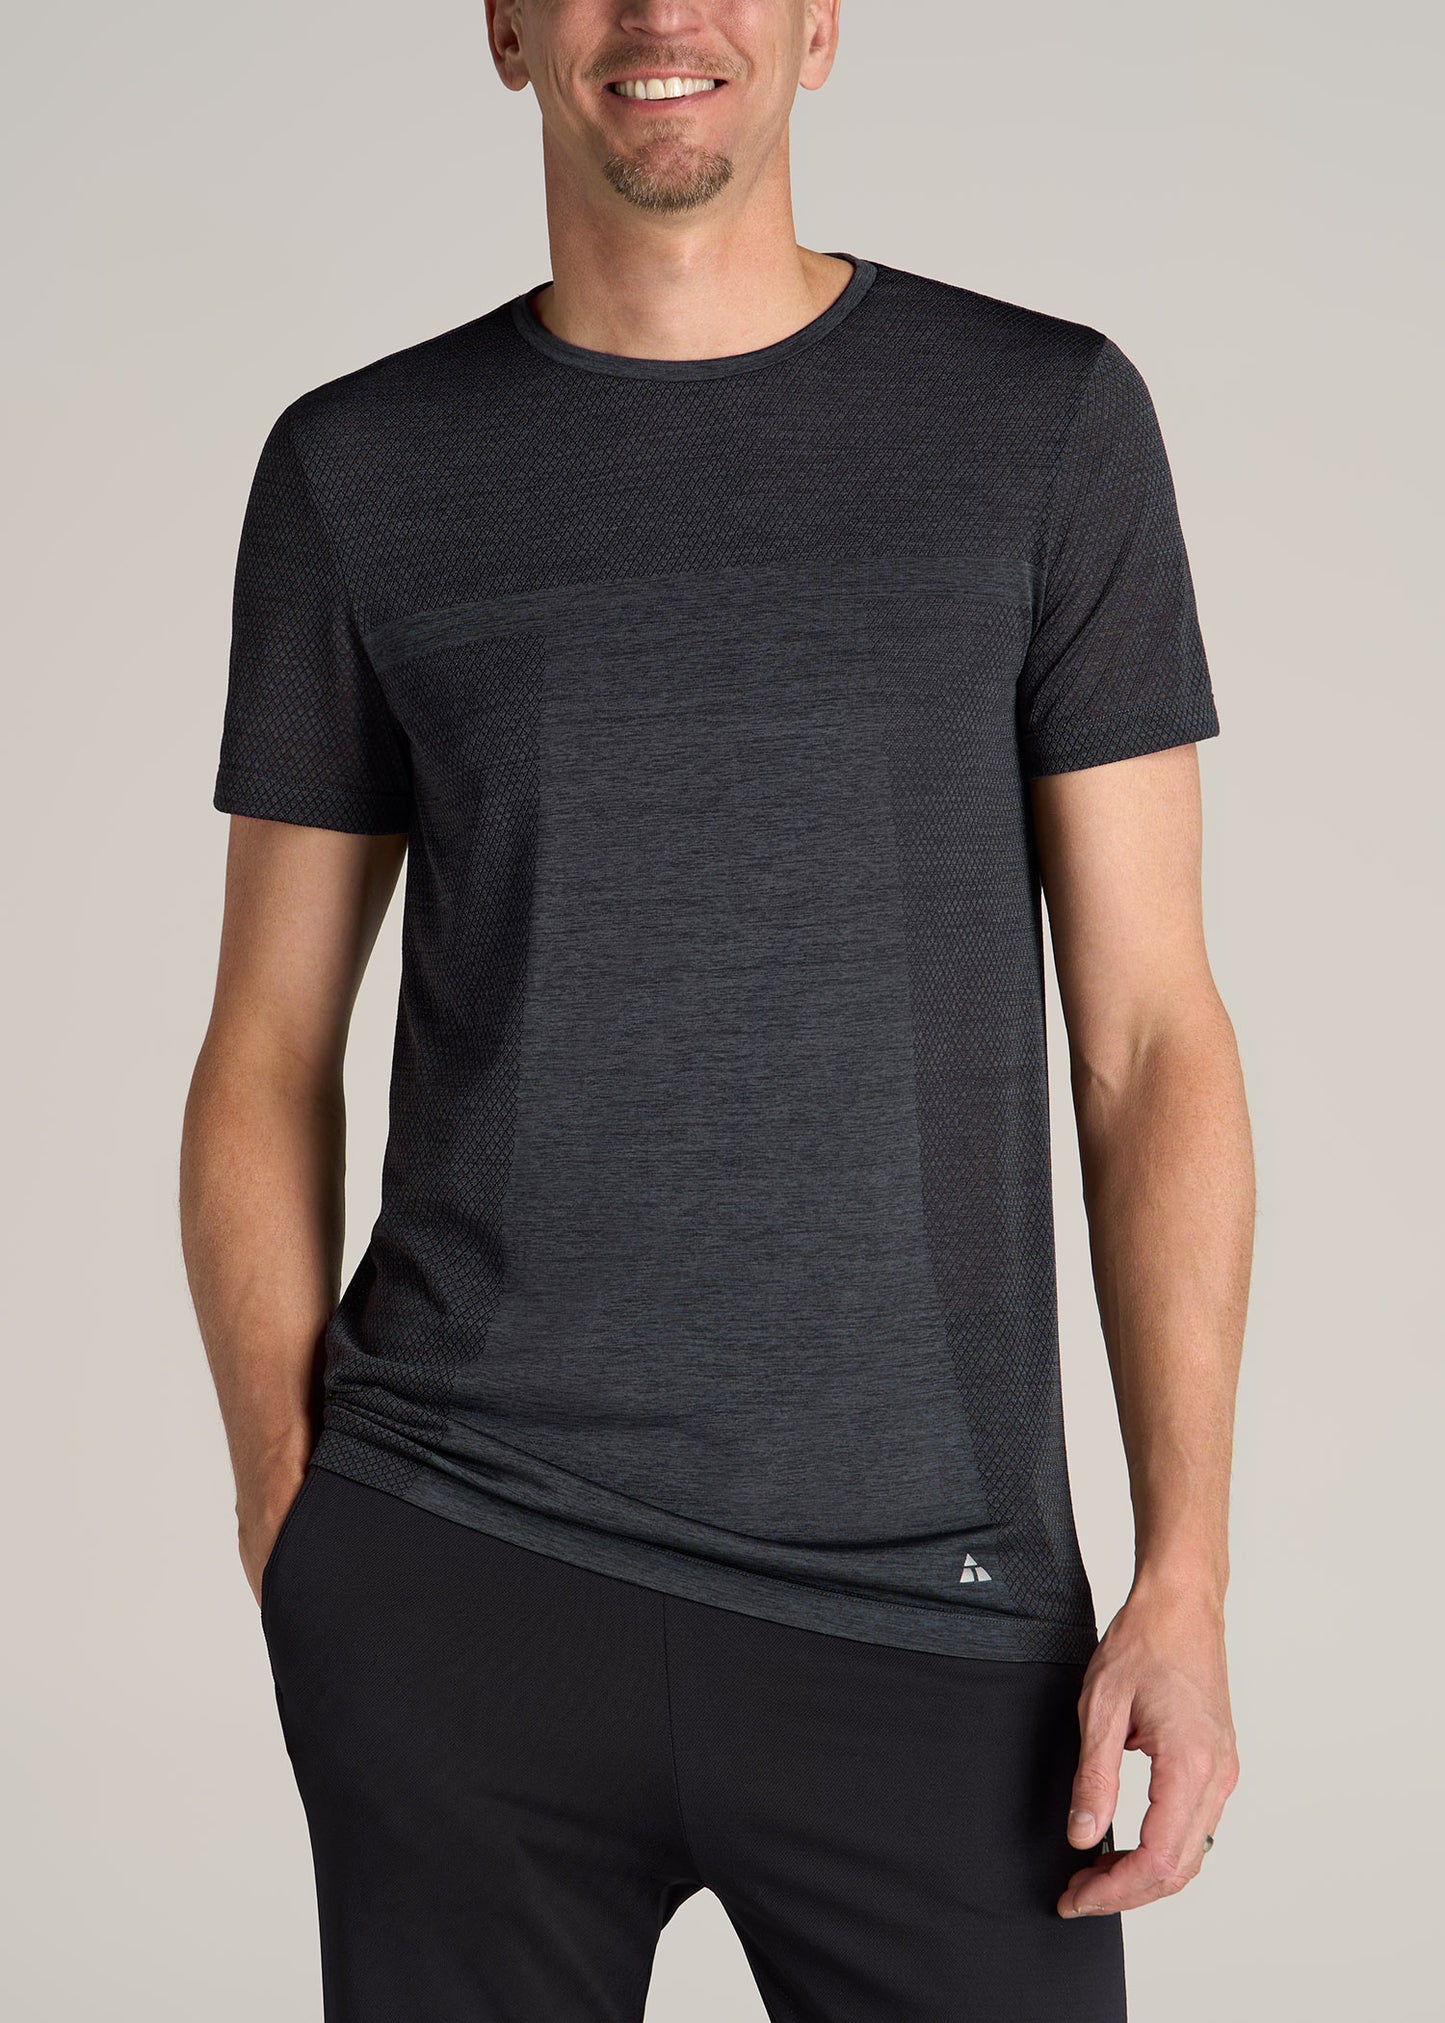 Men's Short Sleeve Workout Slim Fit T-Shirts - Black